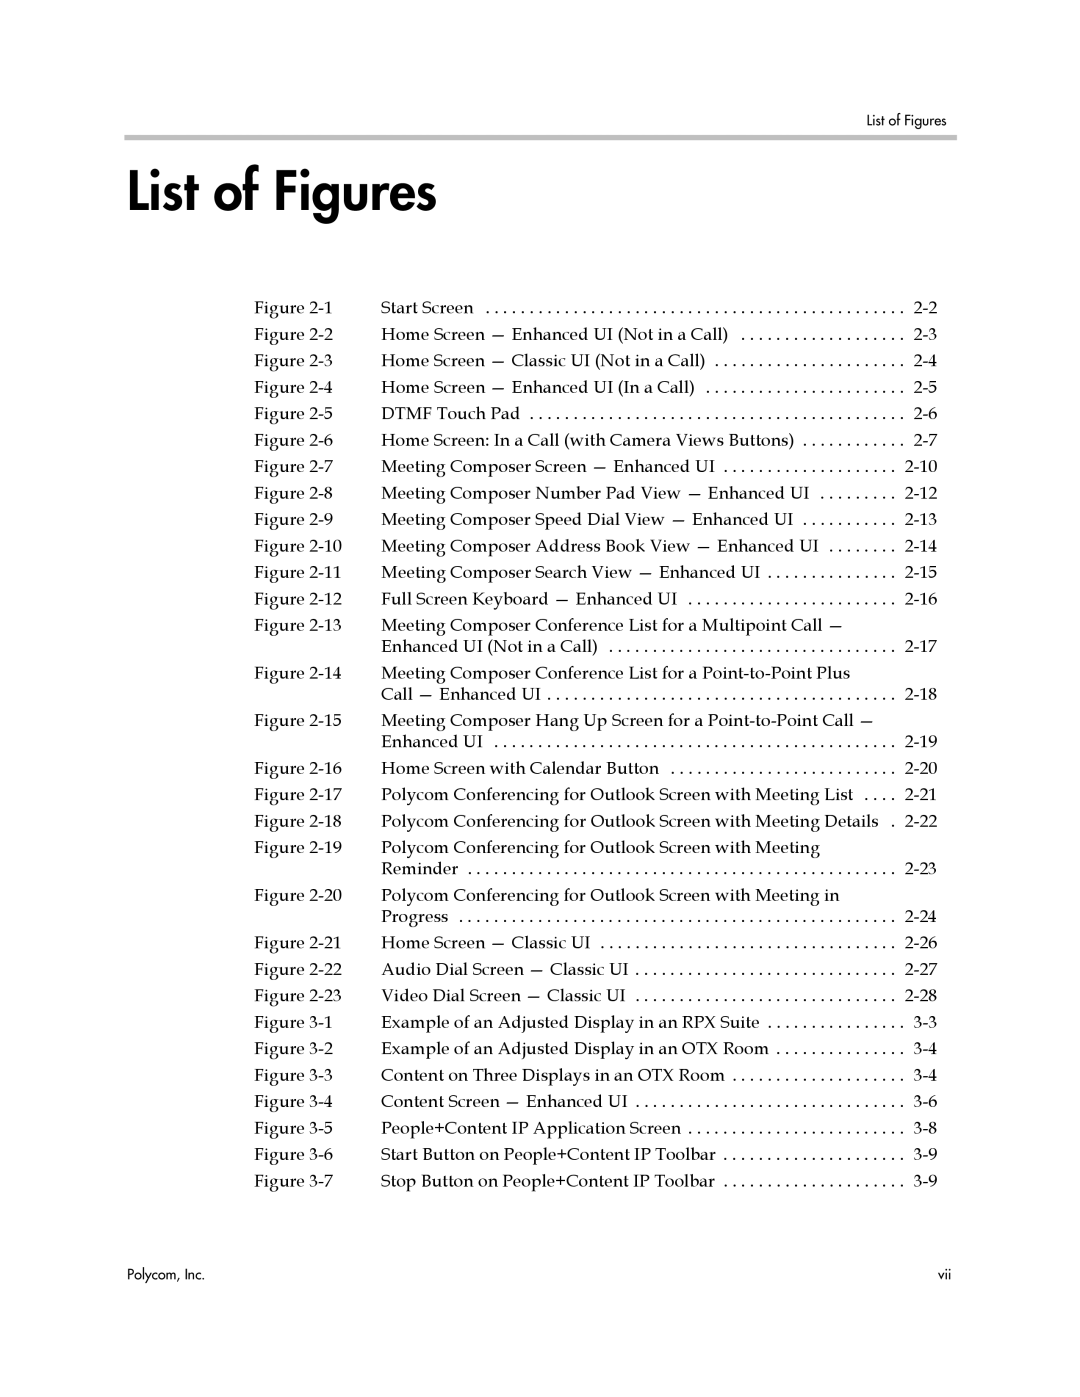 Polycom 300 manual List of Figures, Polycom, Inc 